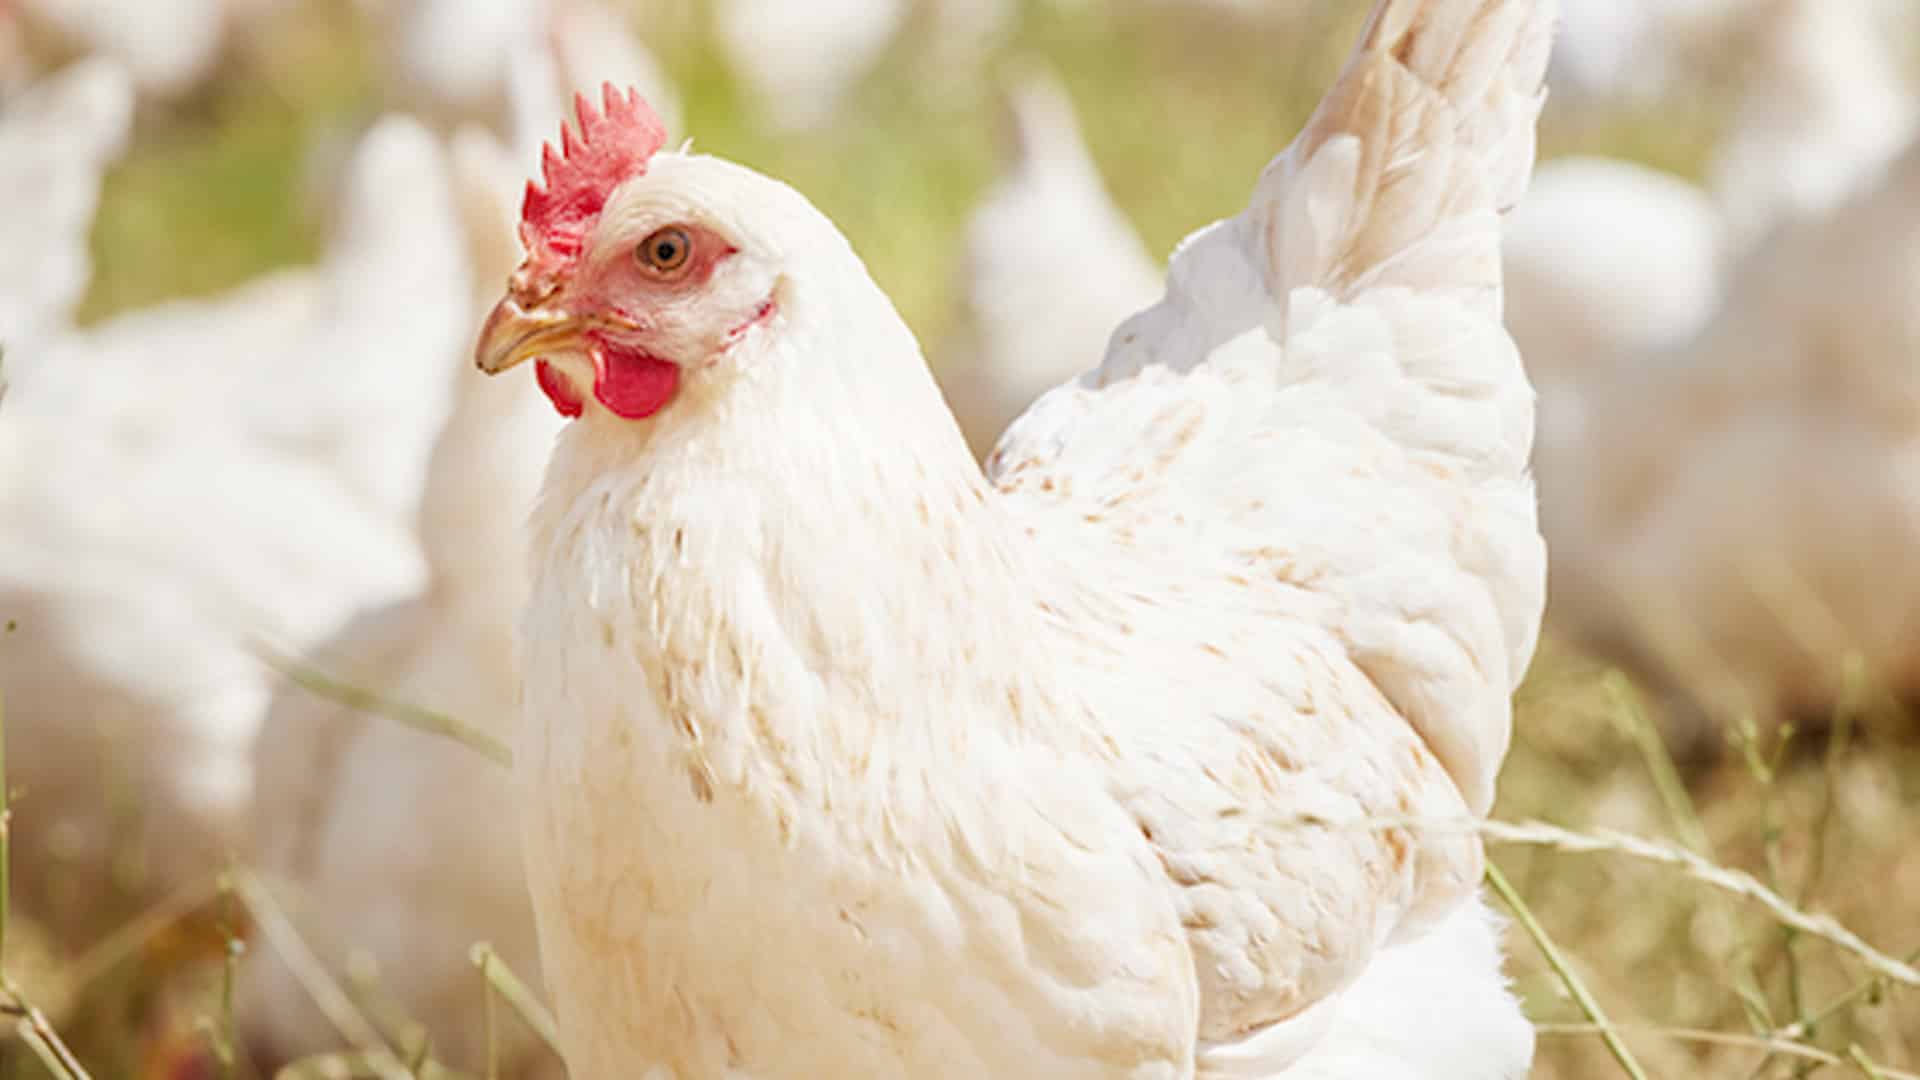 La influenza aviar ha provocado la muerte de millones de aves